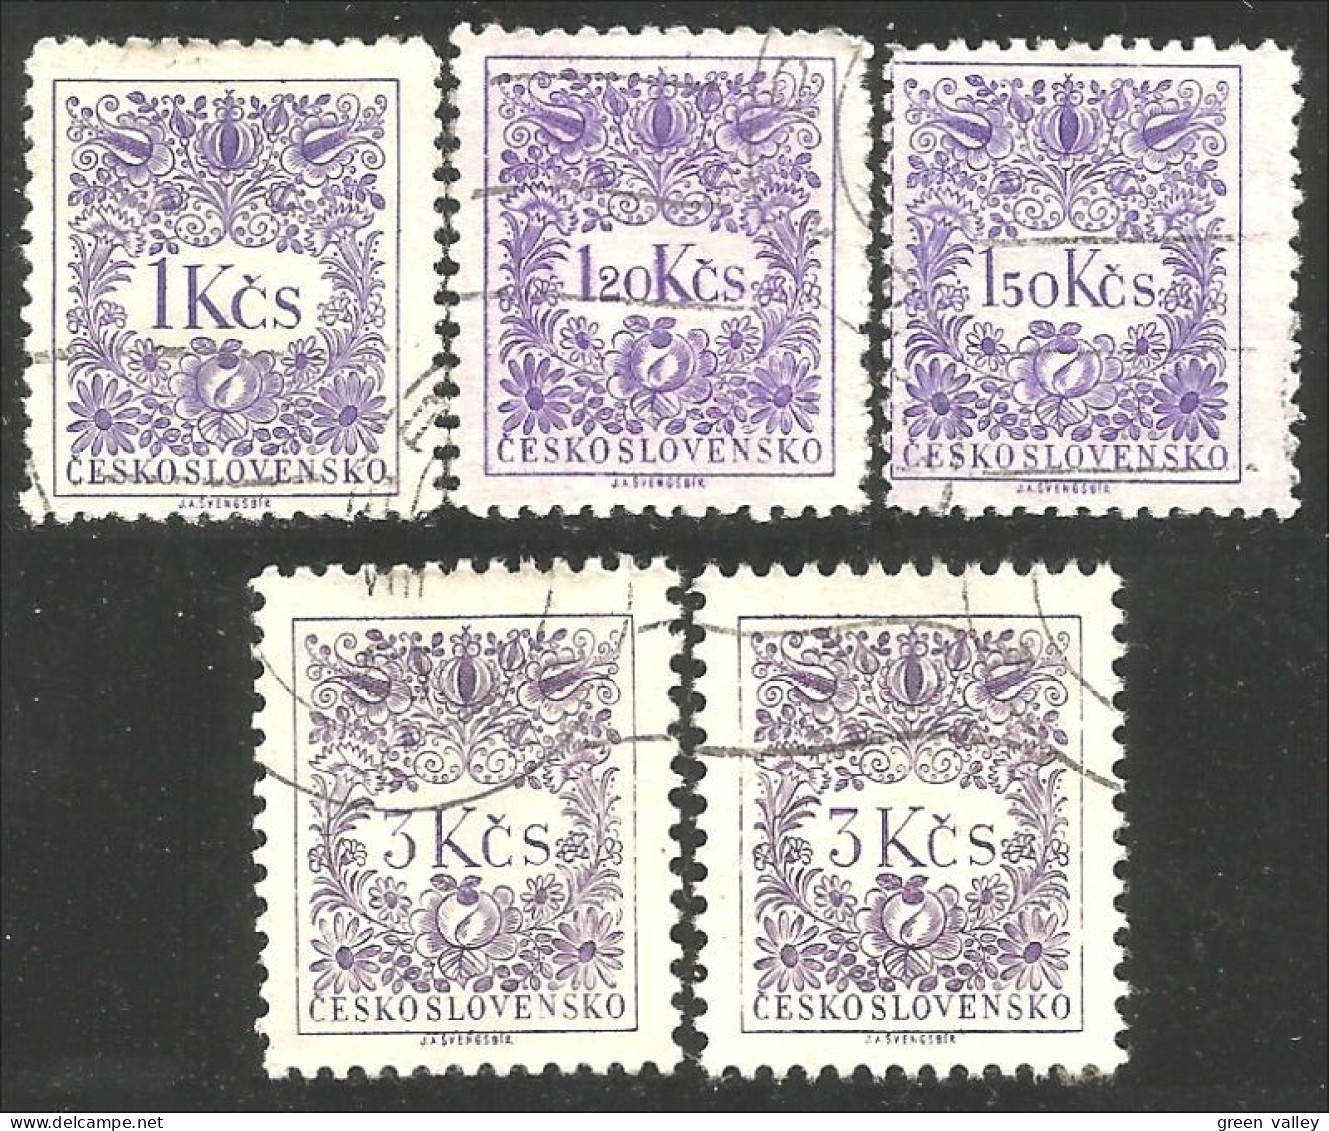 290 Czechoslovakia 1954 Tax Violet Stamps (CZE-244) - Postage Due